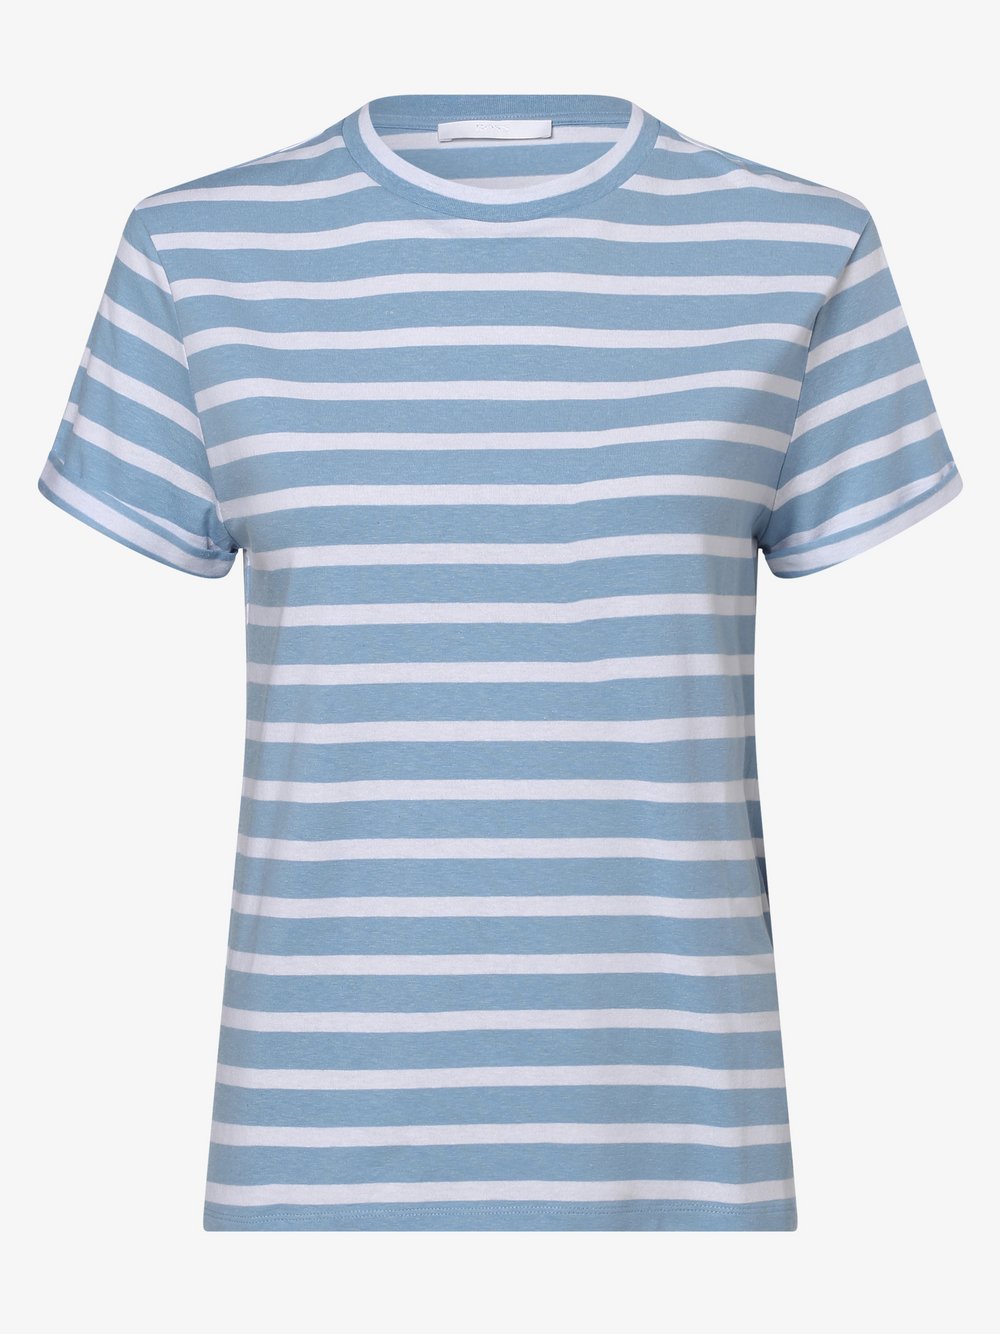 BOSS Casual - T-shirt damski z dodatkiem lnu – C_Espring, niebieski